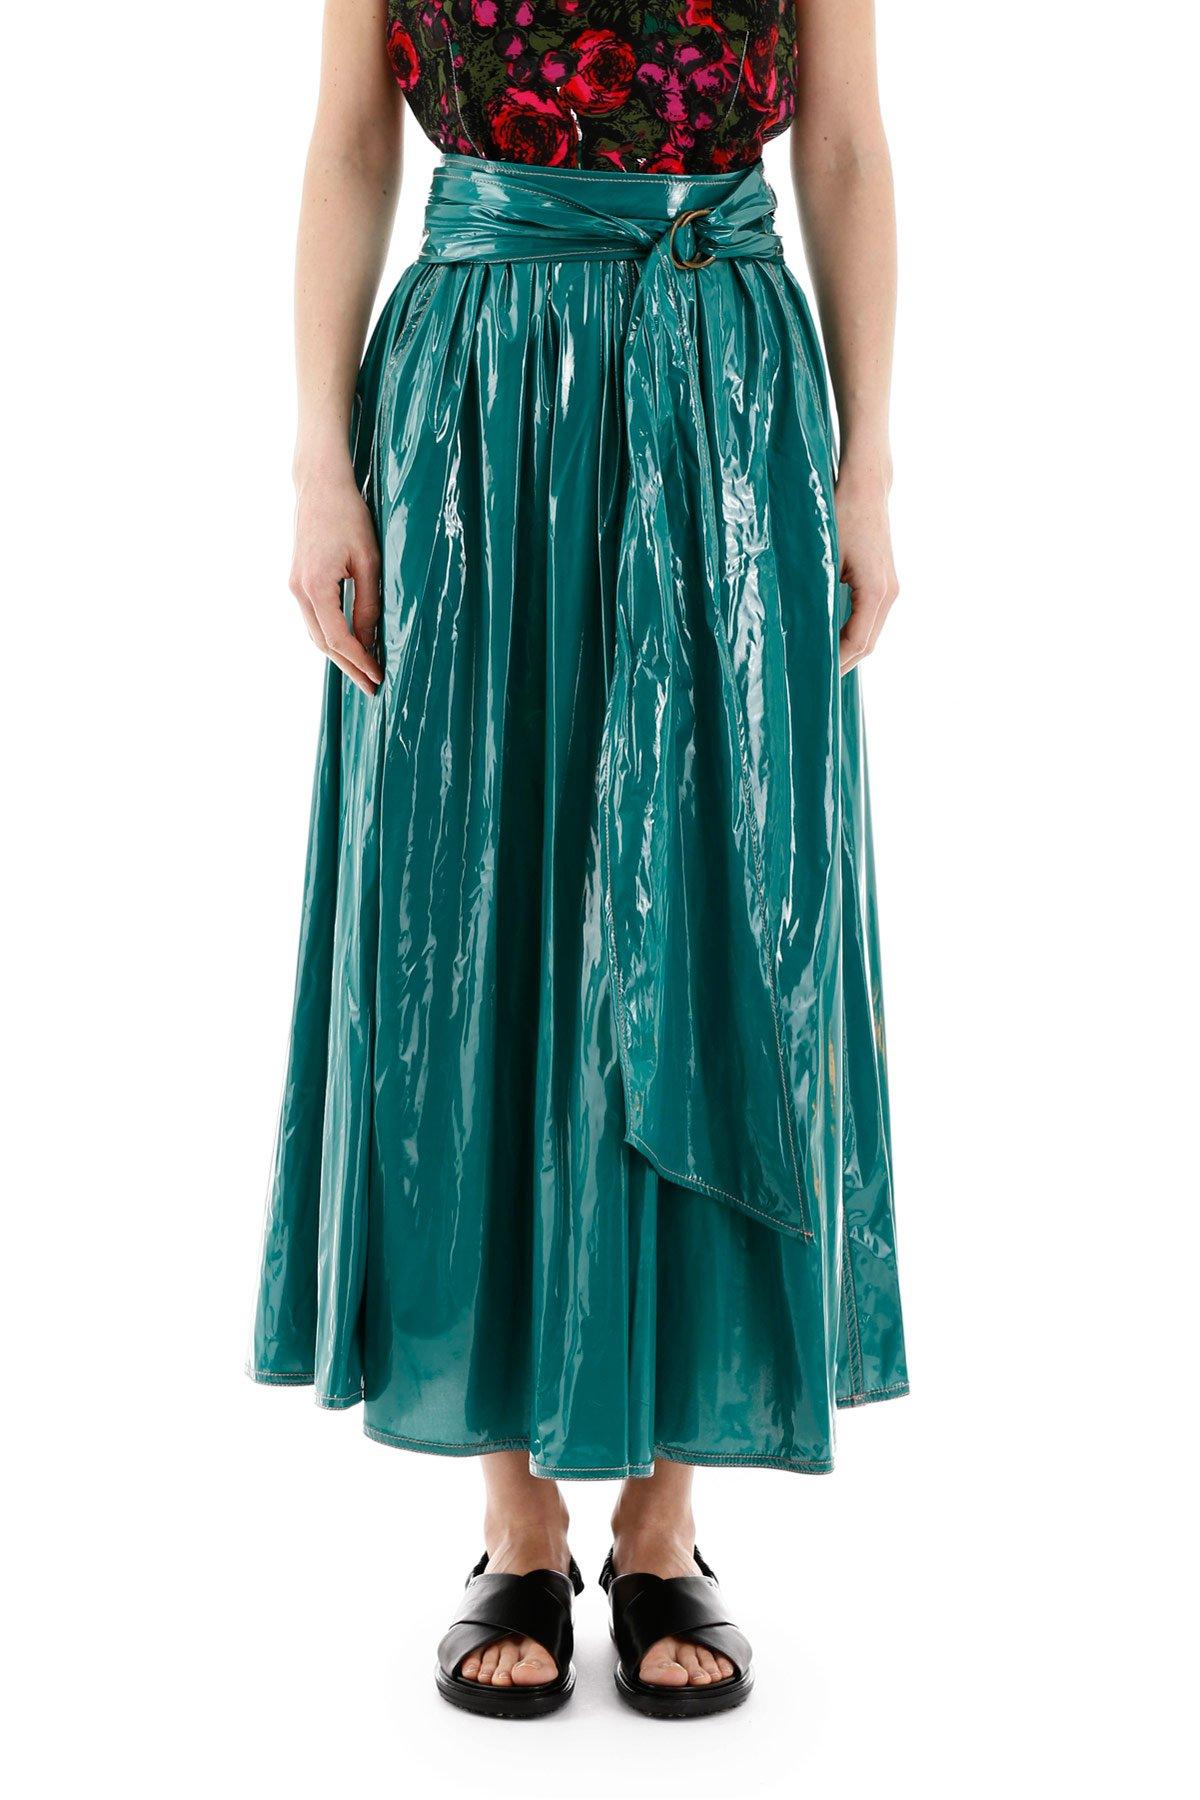 Sies Marjan Silk Glossy Skirt in Green - Lyst